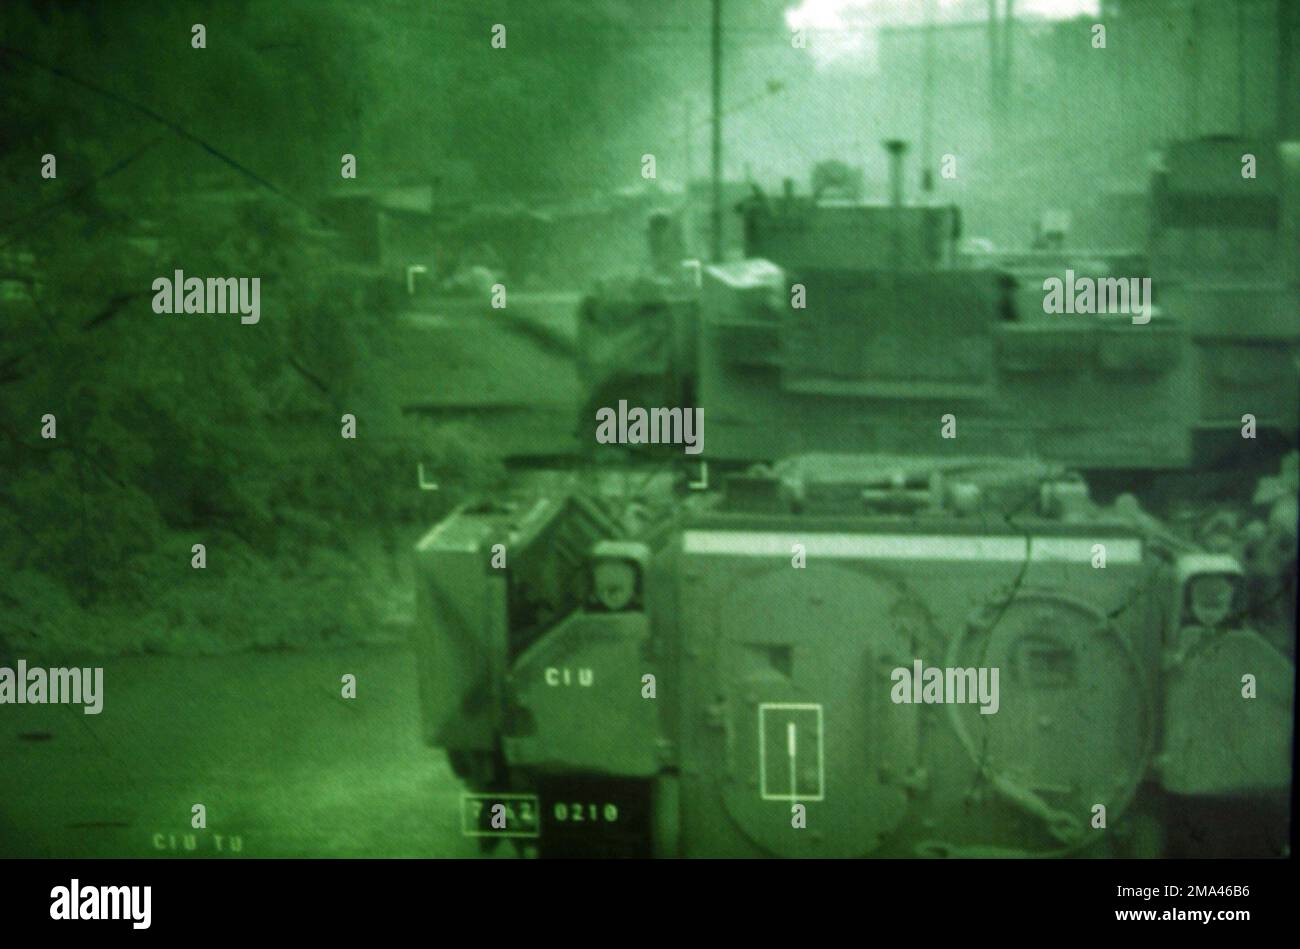 041109-A-1067B-001. Subject Operation/Series: IRAQI FREEDOM Base: Fallujah State: Al Anbar Country: Iraq (IRQ) Scene Major Command Shown: 2-7 CAV Stock Photo